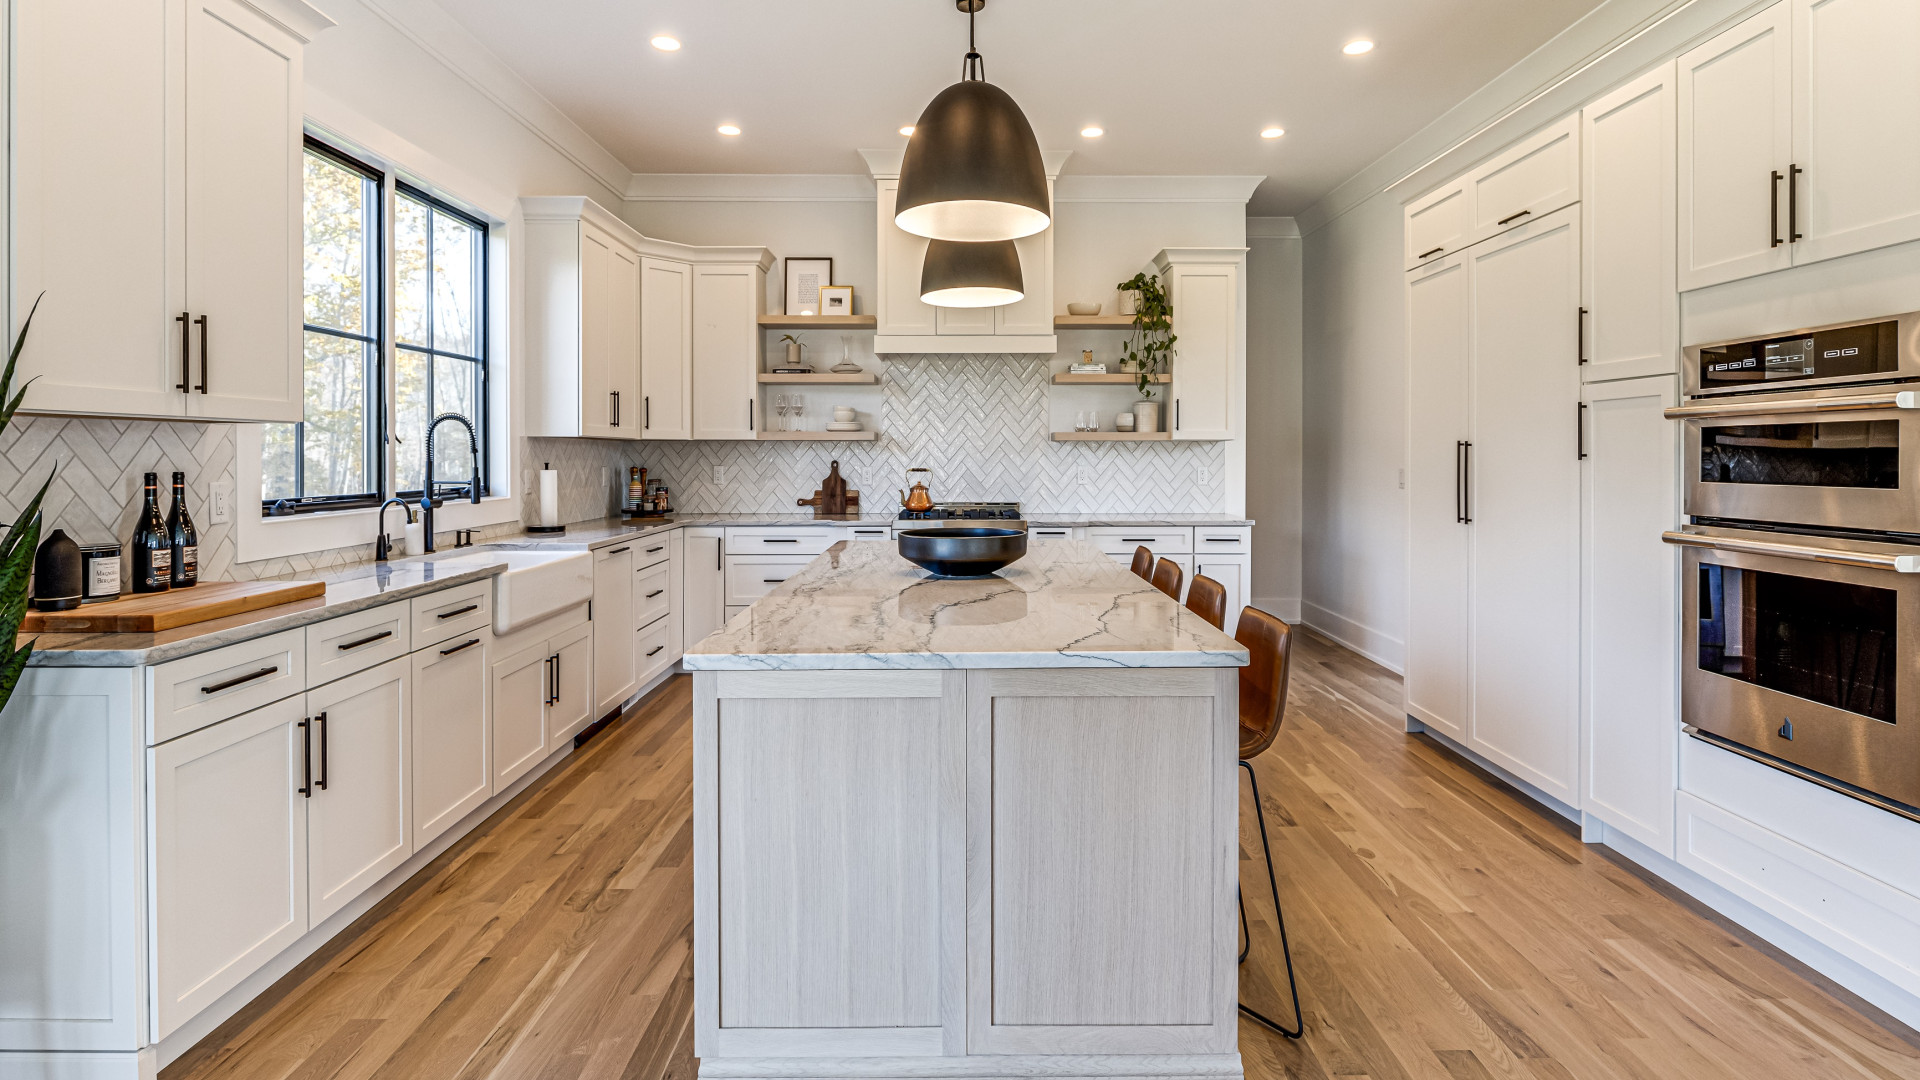 Luxury kitchen featuring custom wooden floors and a herringbone patterned backsplash, New Jersey